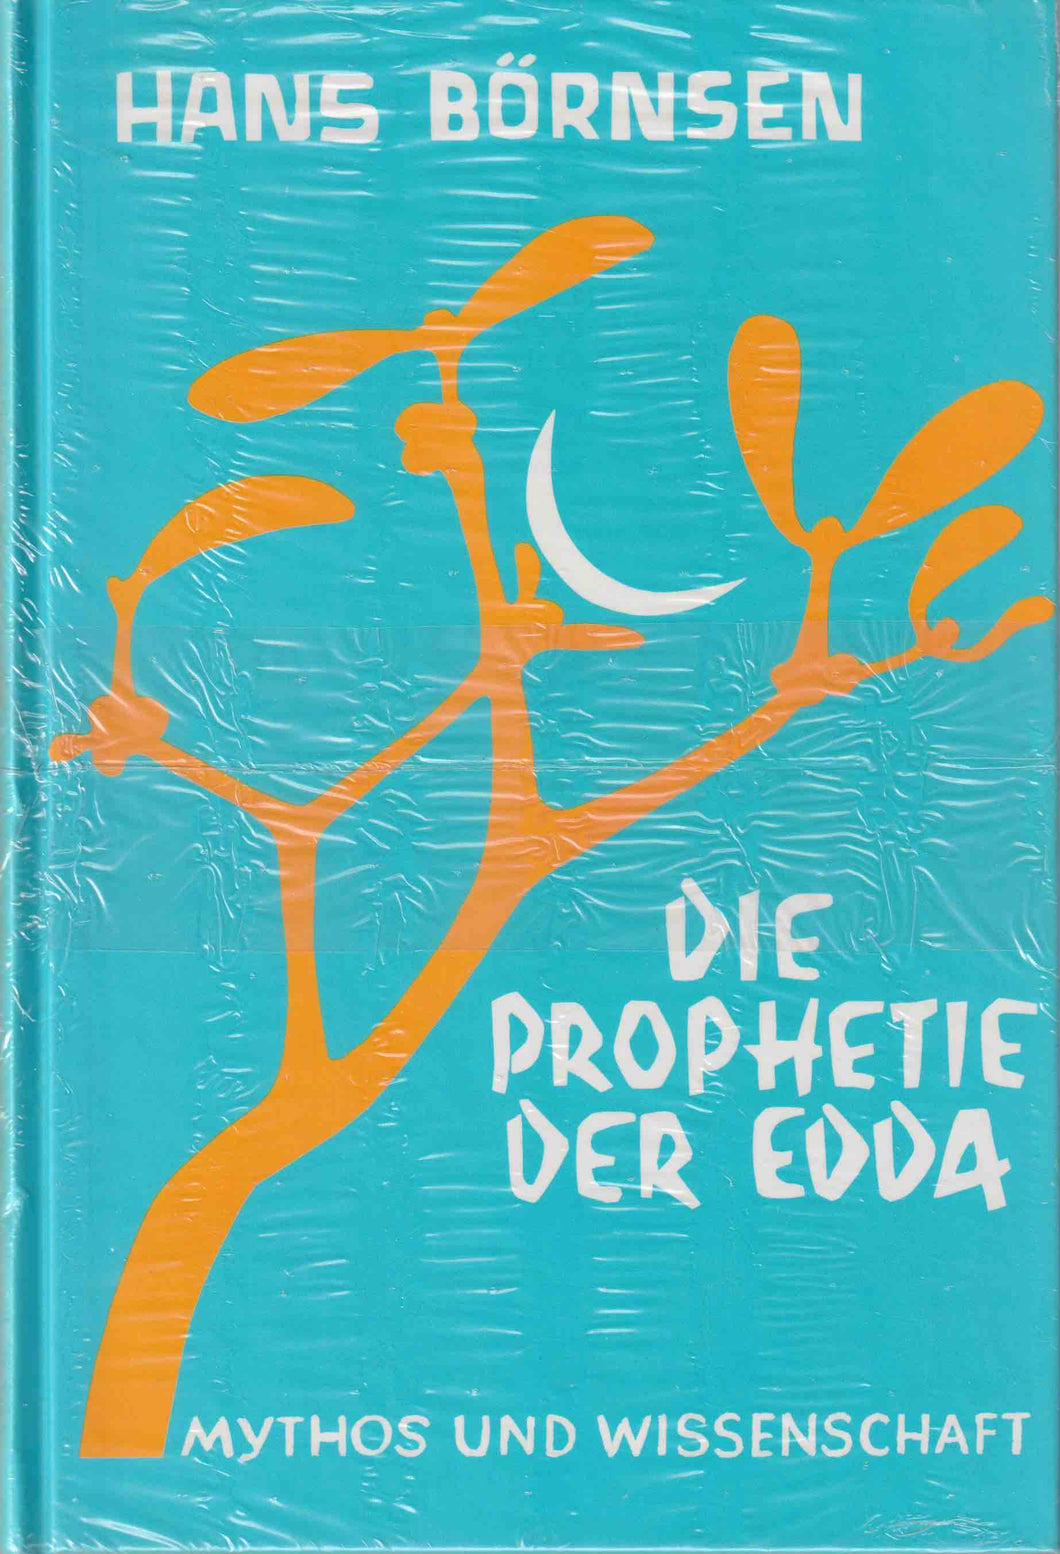 Die Prophetie der Edda